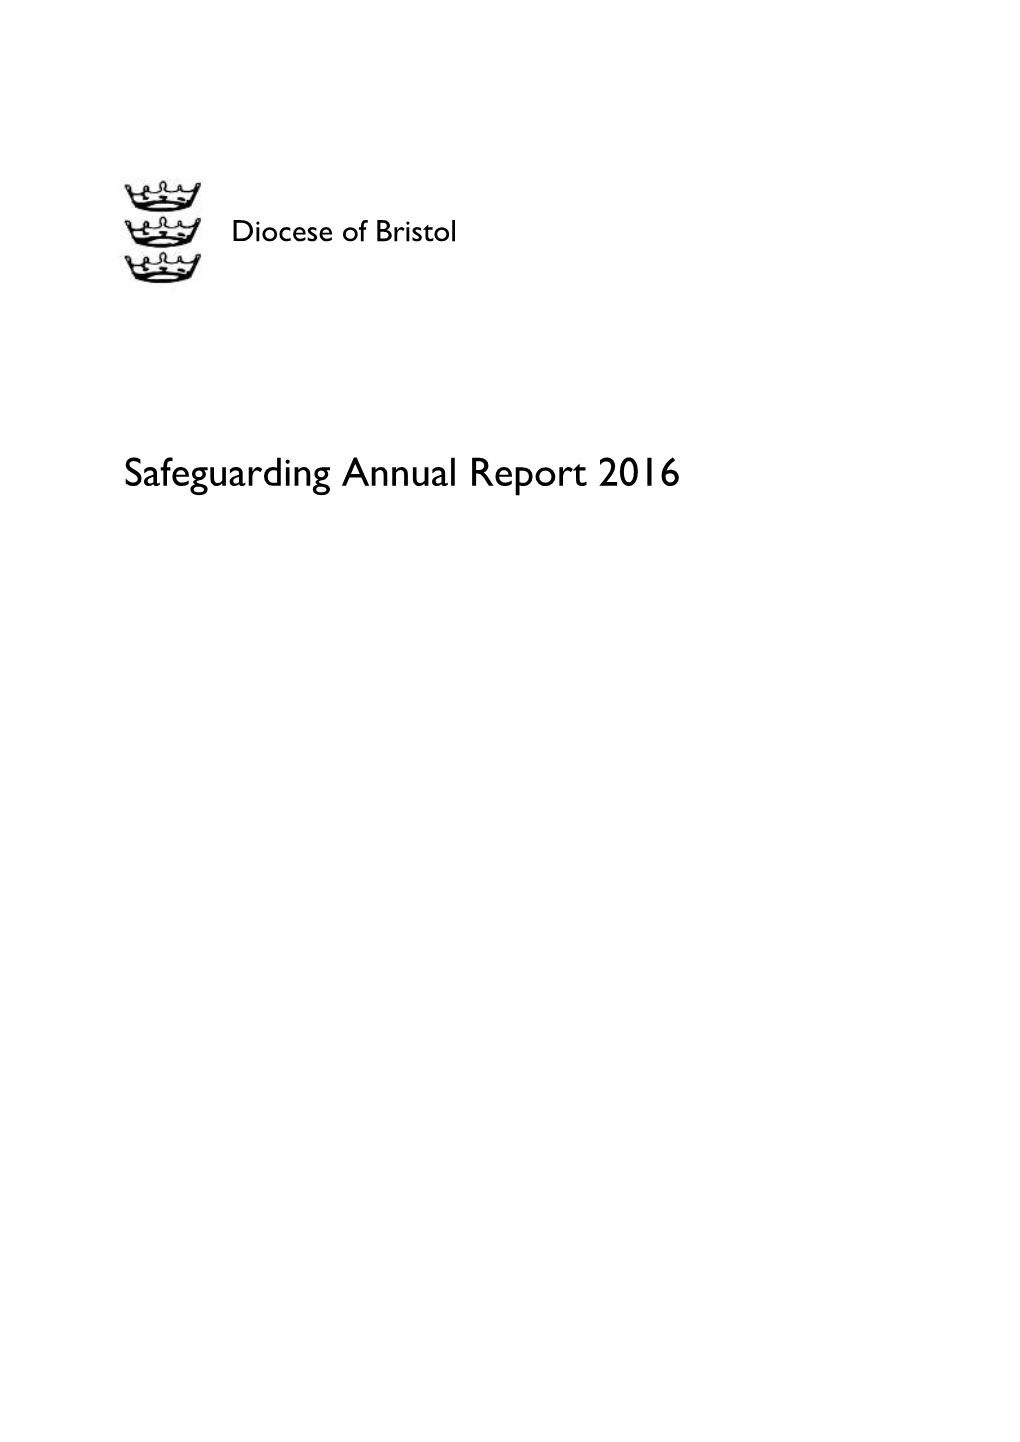 2016 Safeguarding Annual Report